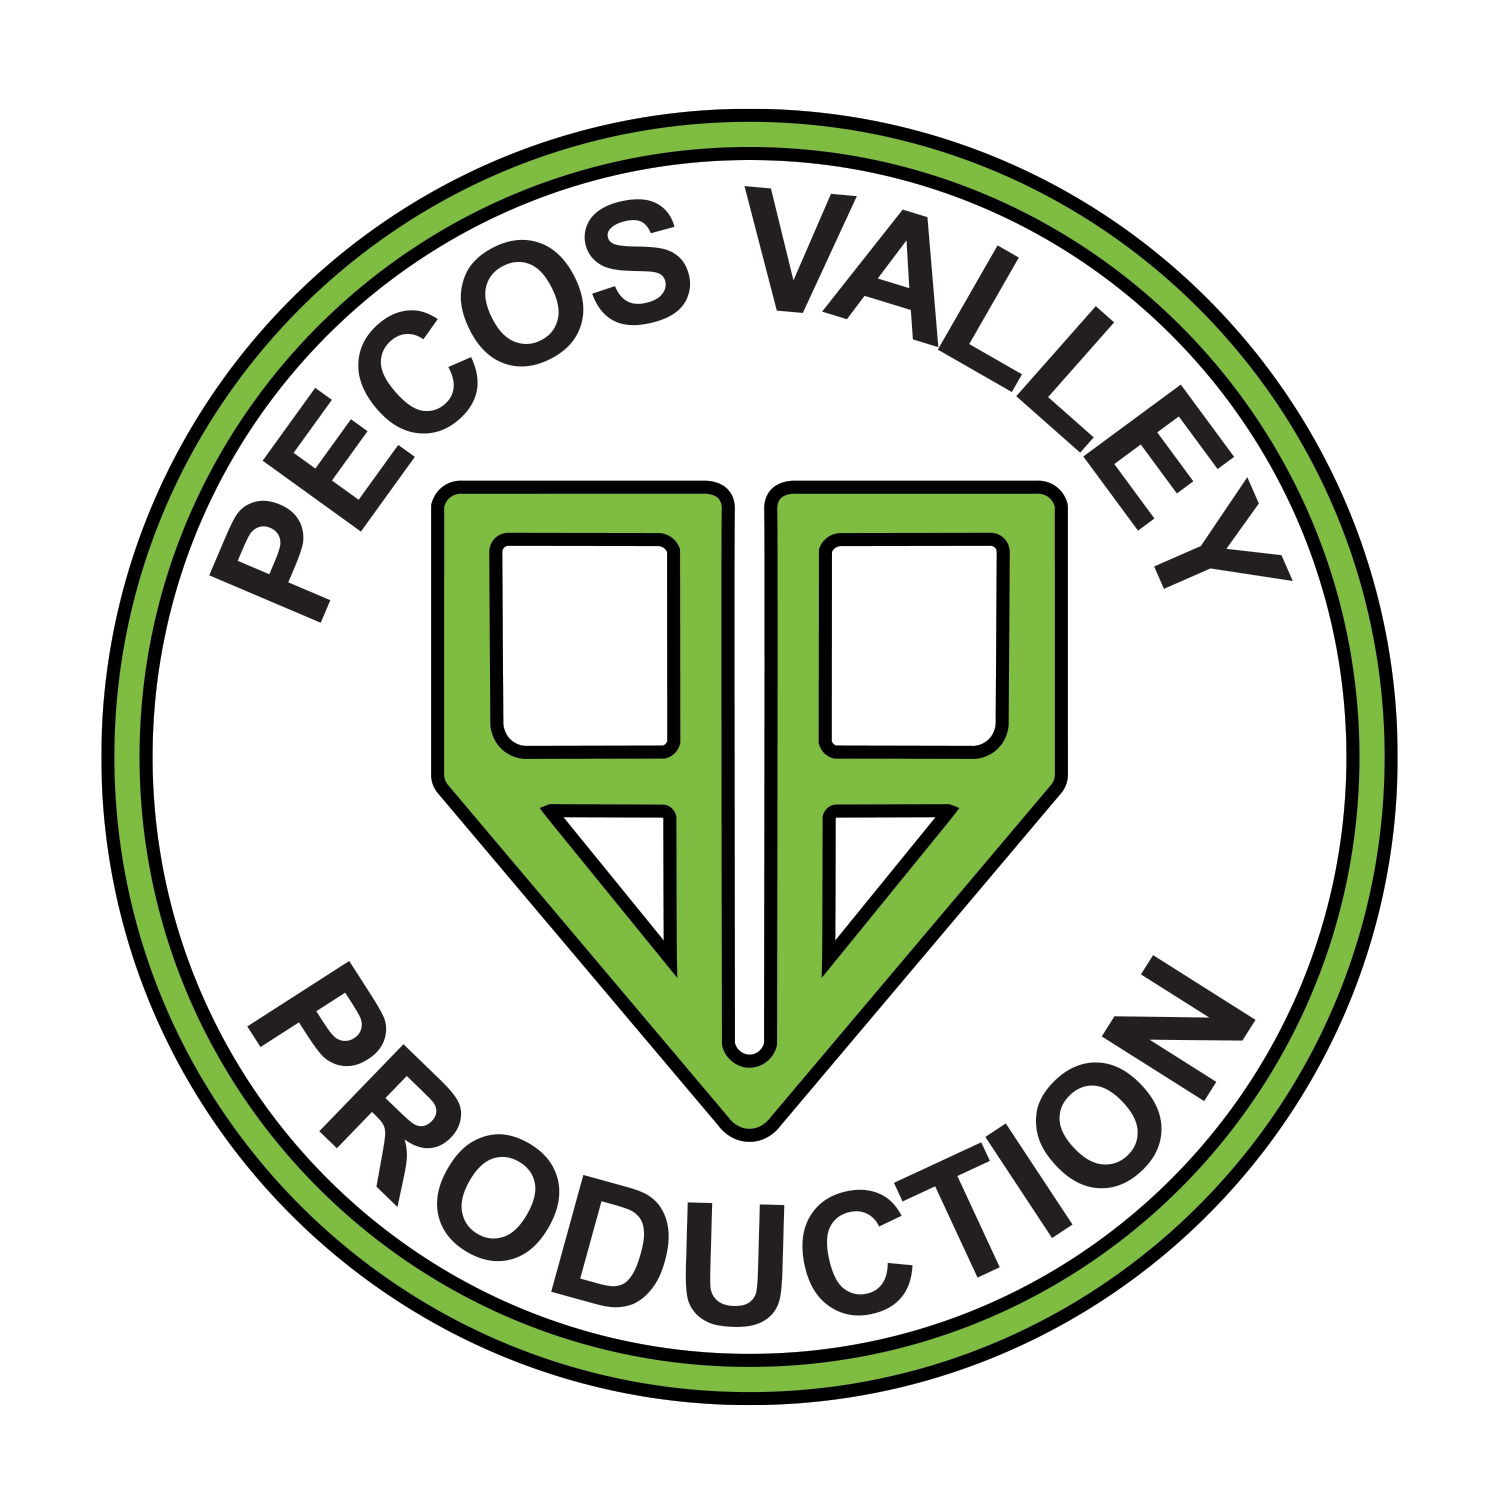 Pecos Valley Production-logo